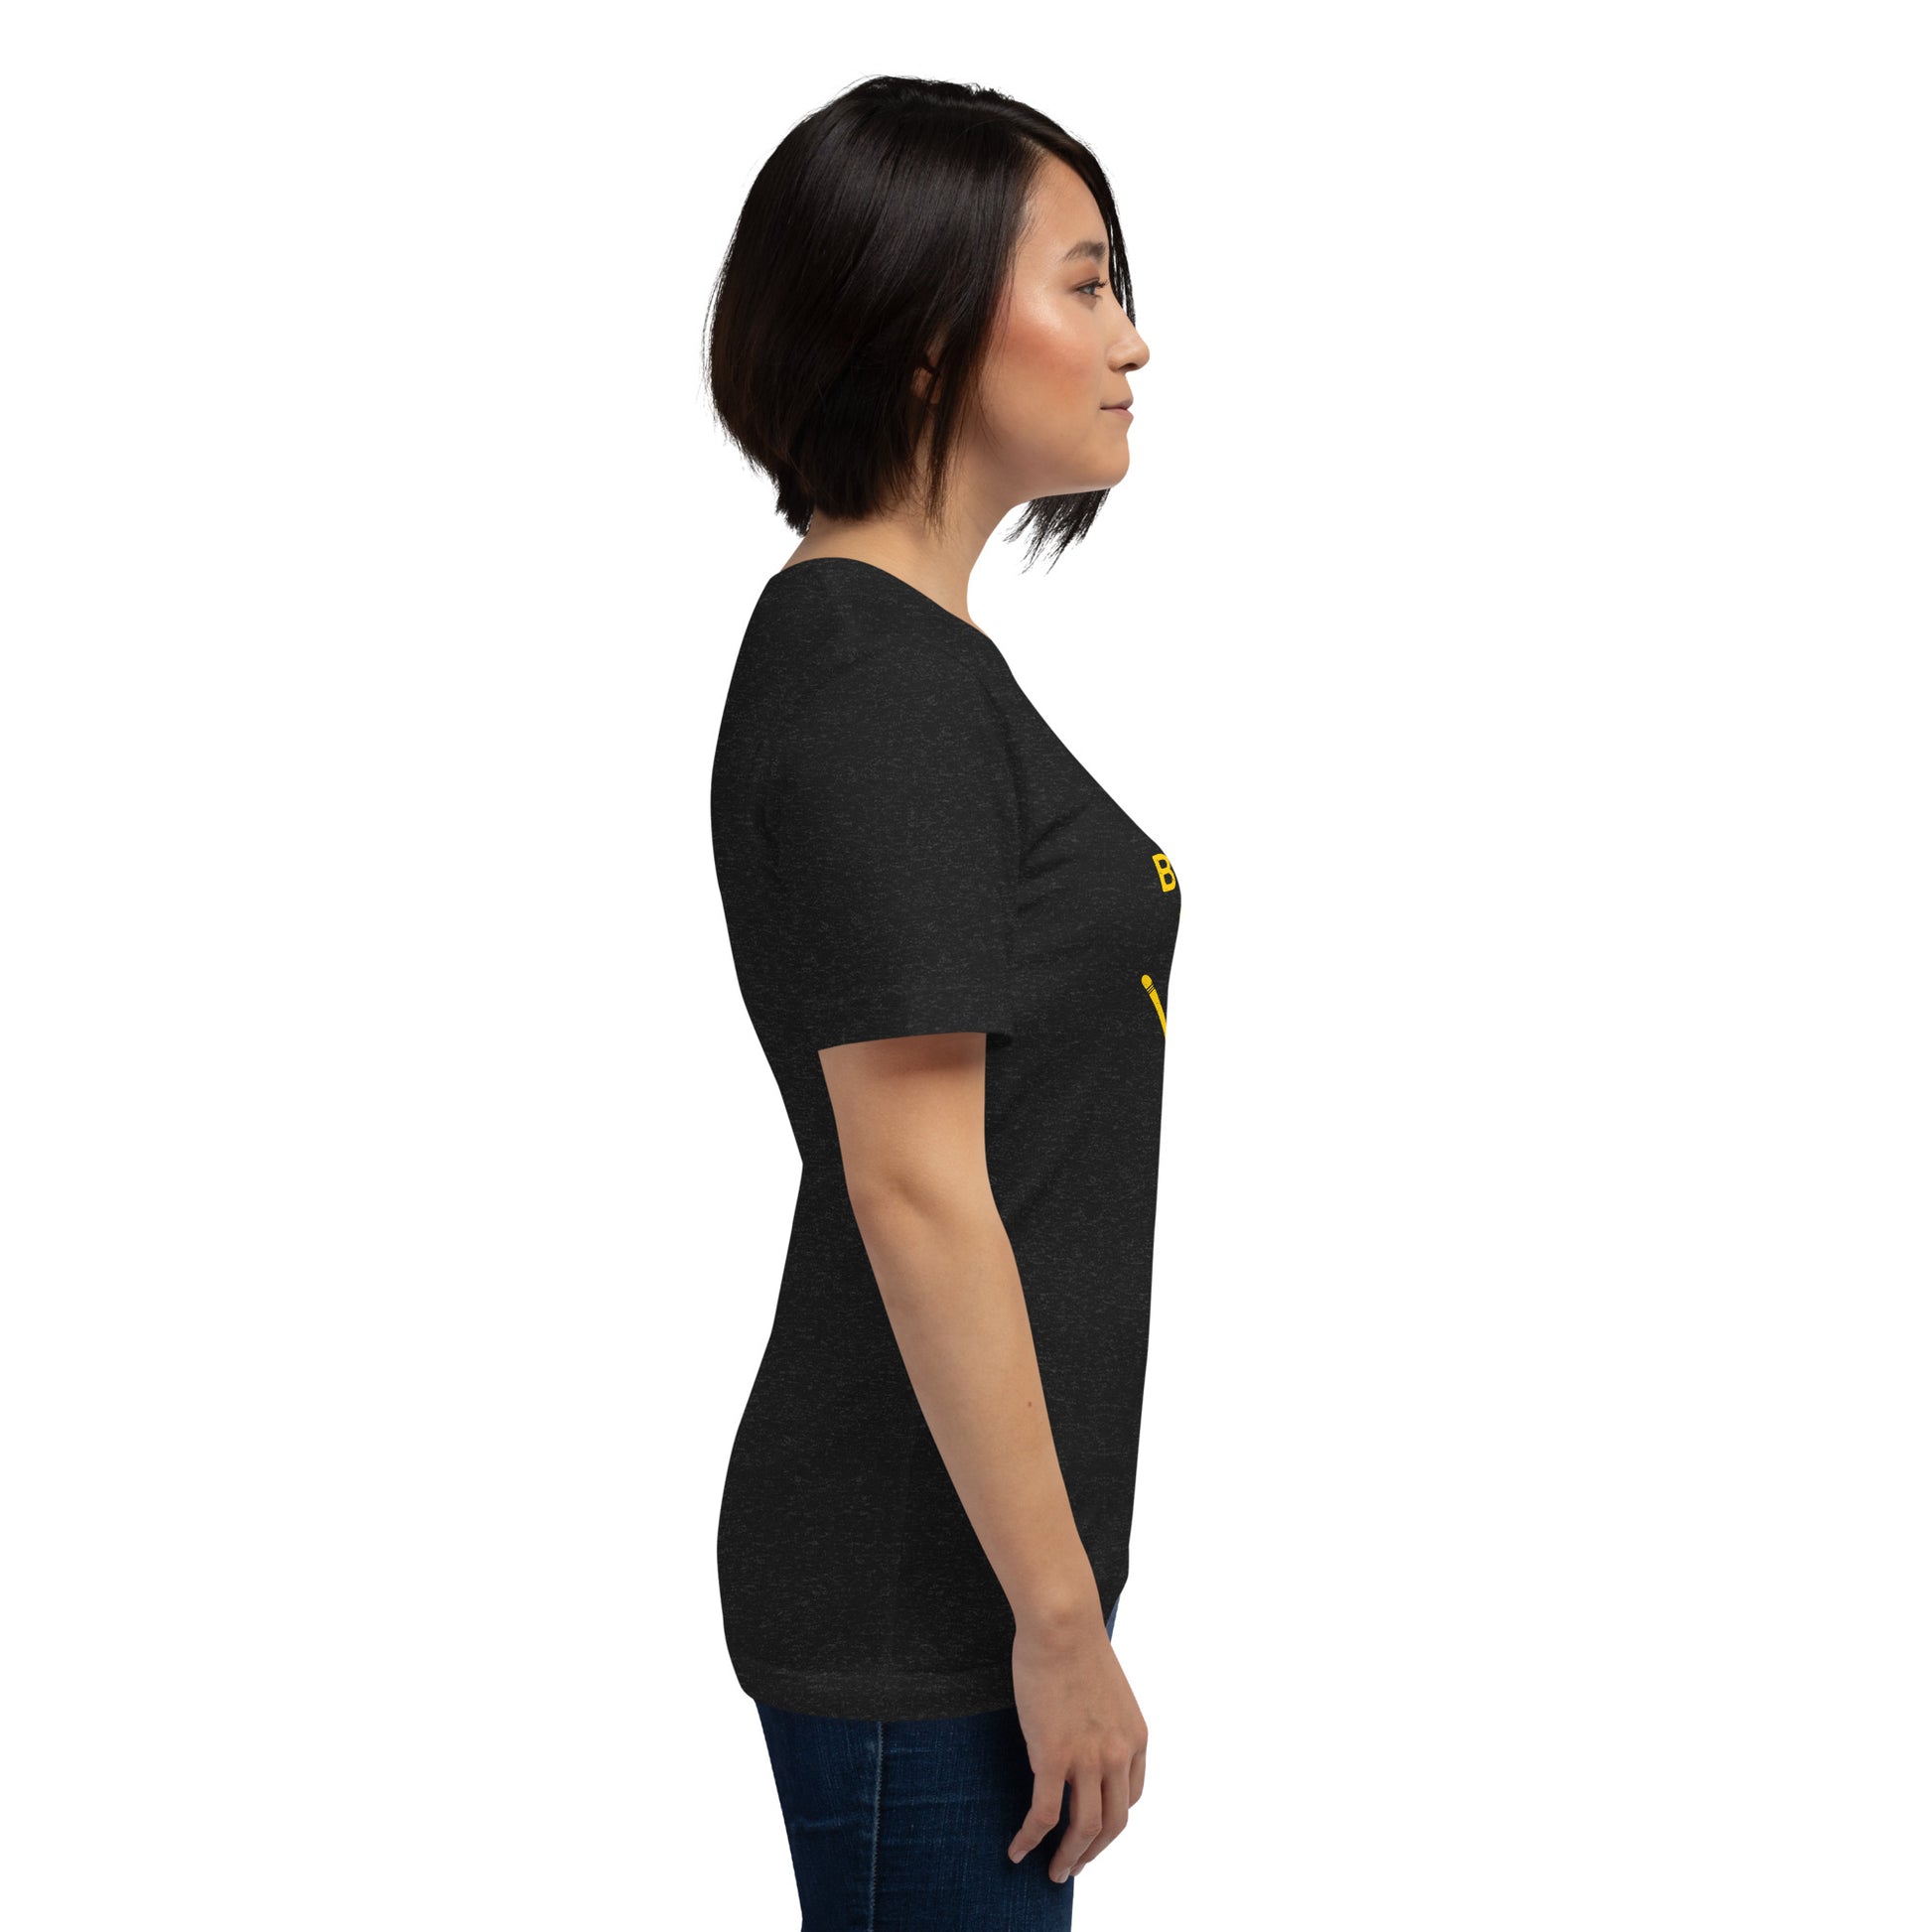  Unisex T-Shirt - Black Heather - Side view of t-shirt on woman - yellow Byron Bay Surf Club logo on front - Genuine Byron Bay Merchandise | Produced by Go Sea Kayak Byron Bay 